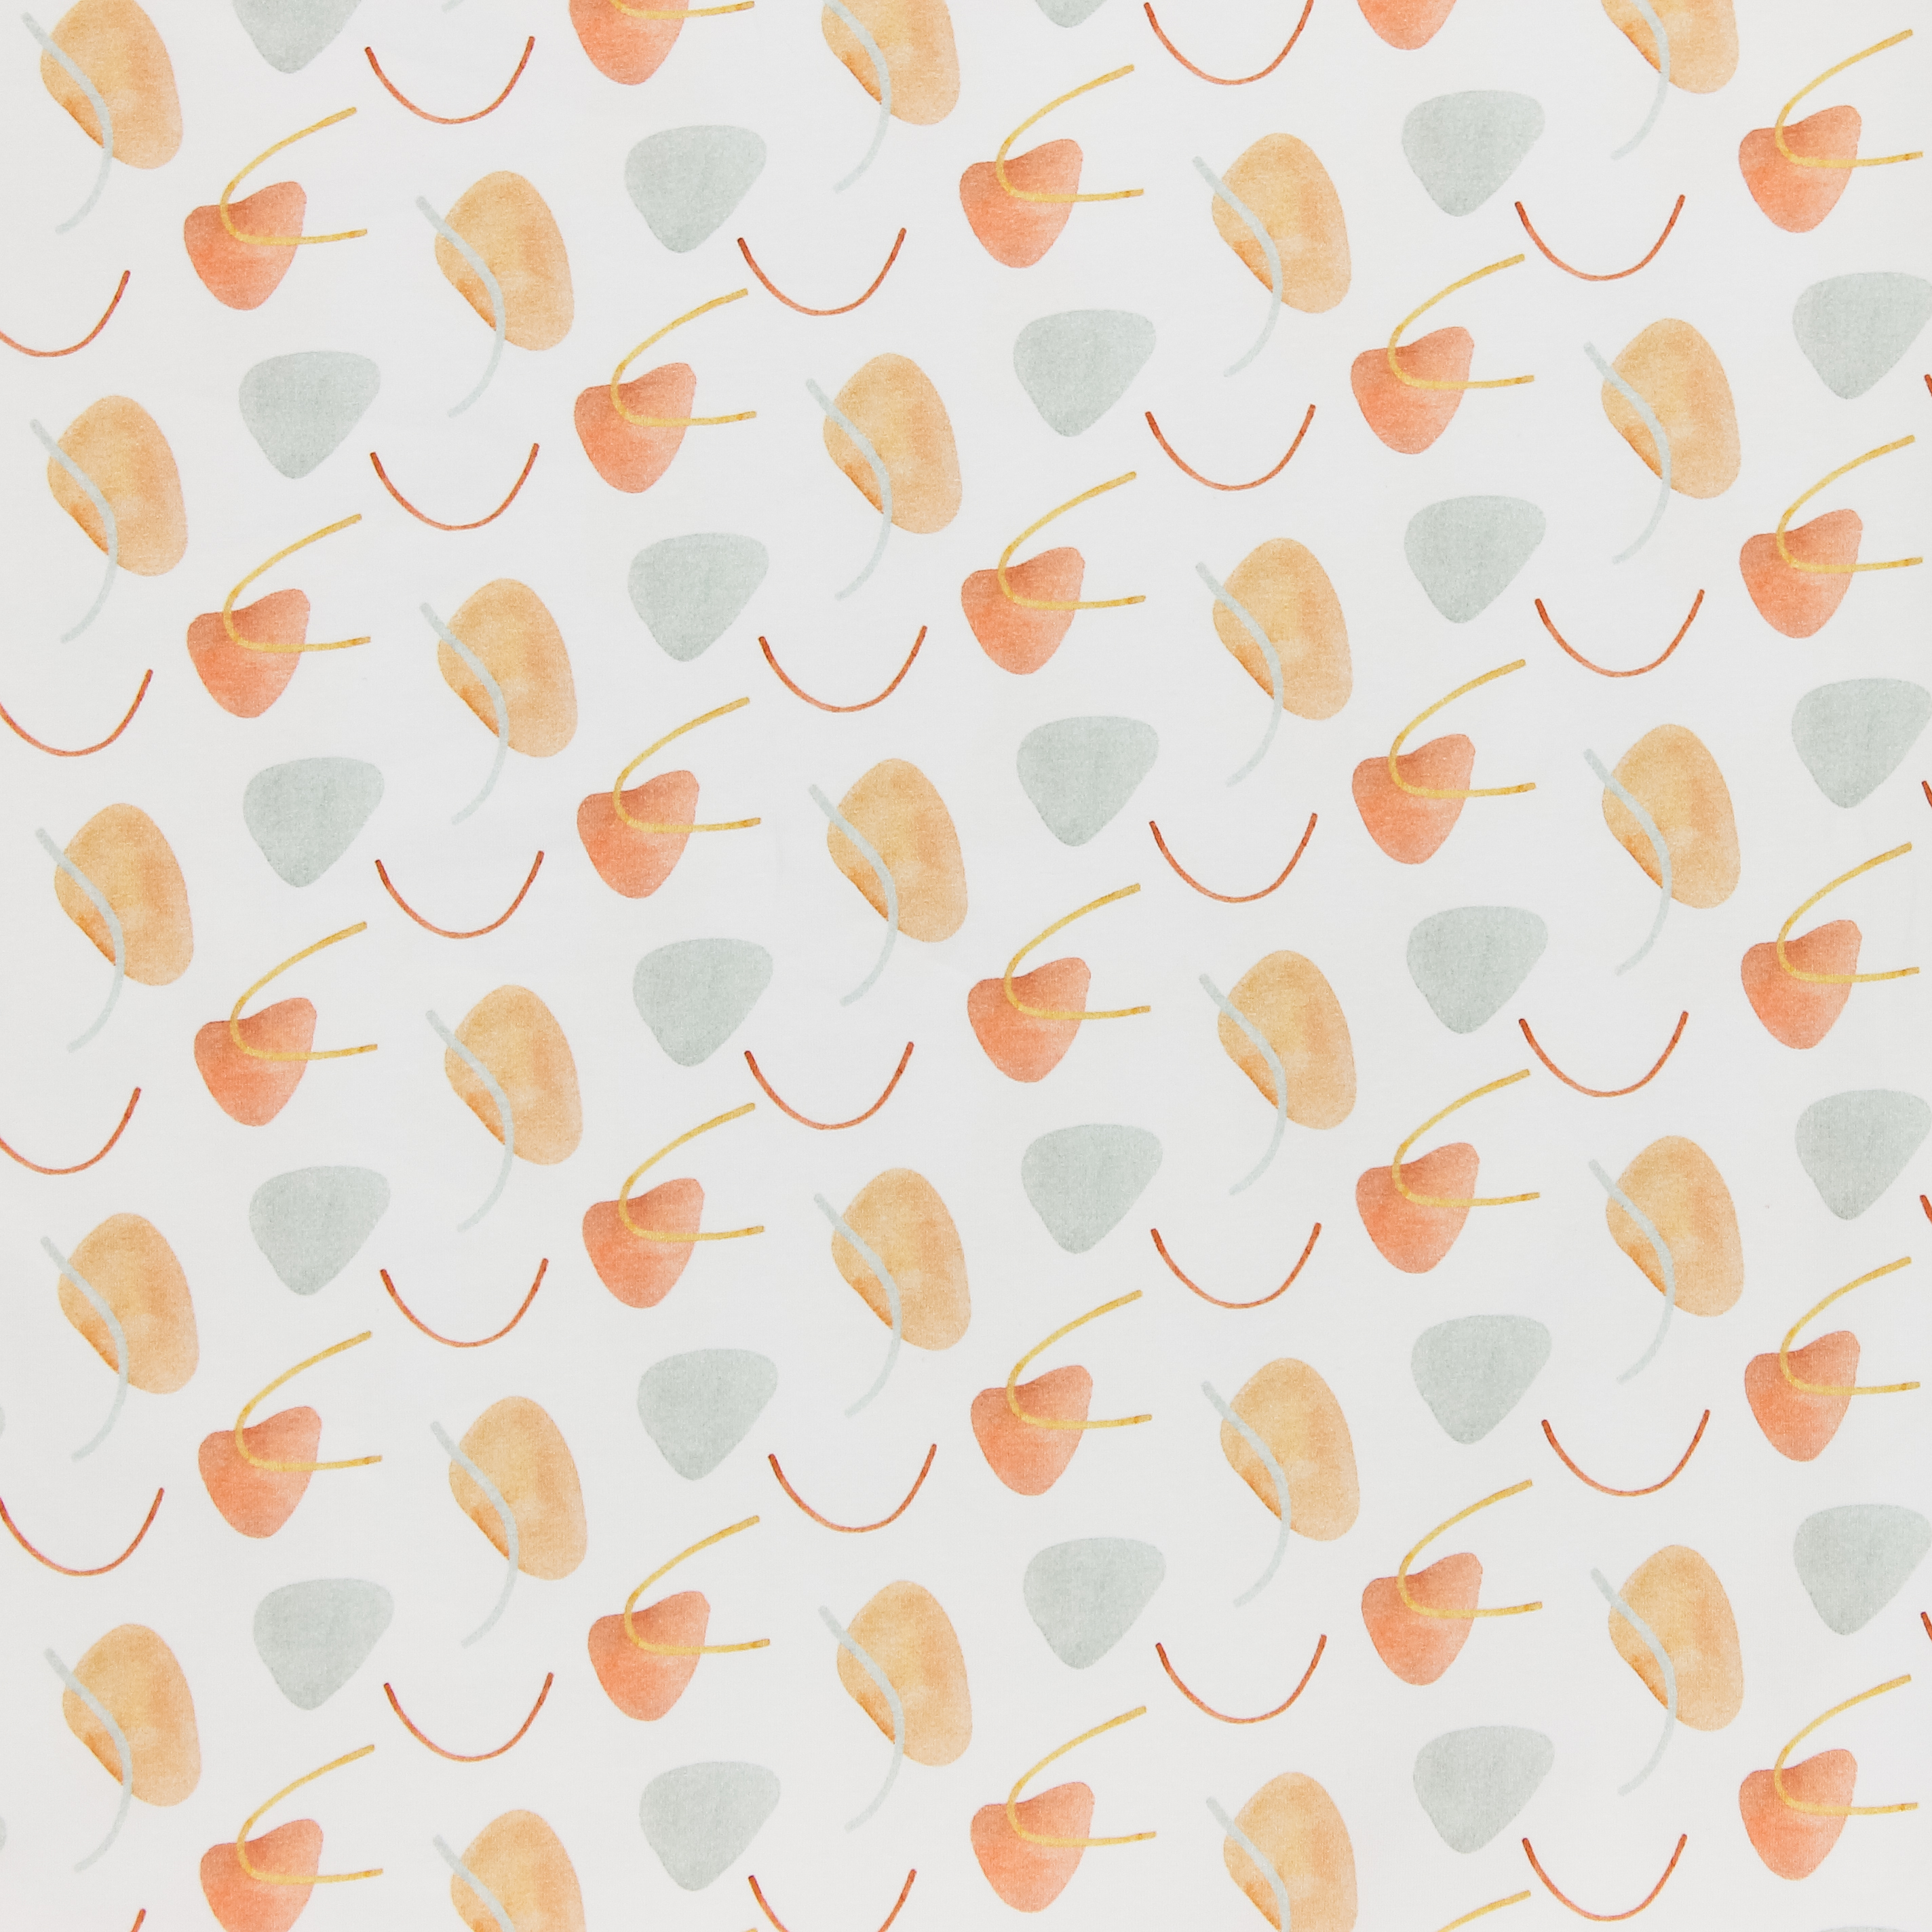 Tricot wit met oranje patroon - Poppy